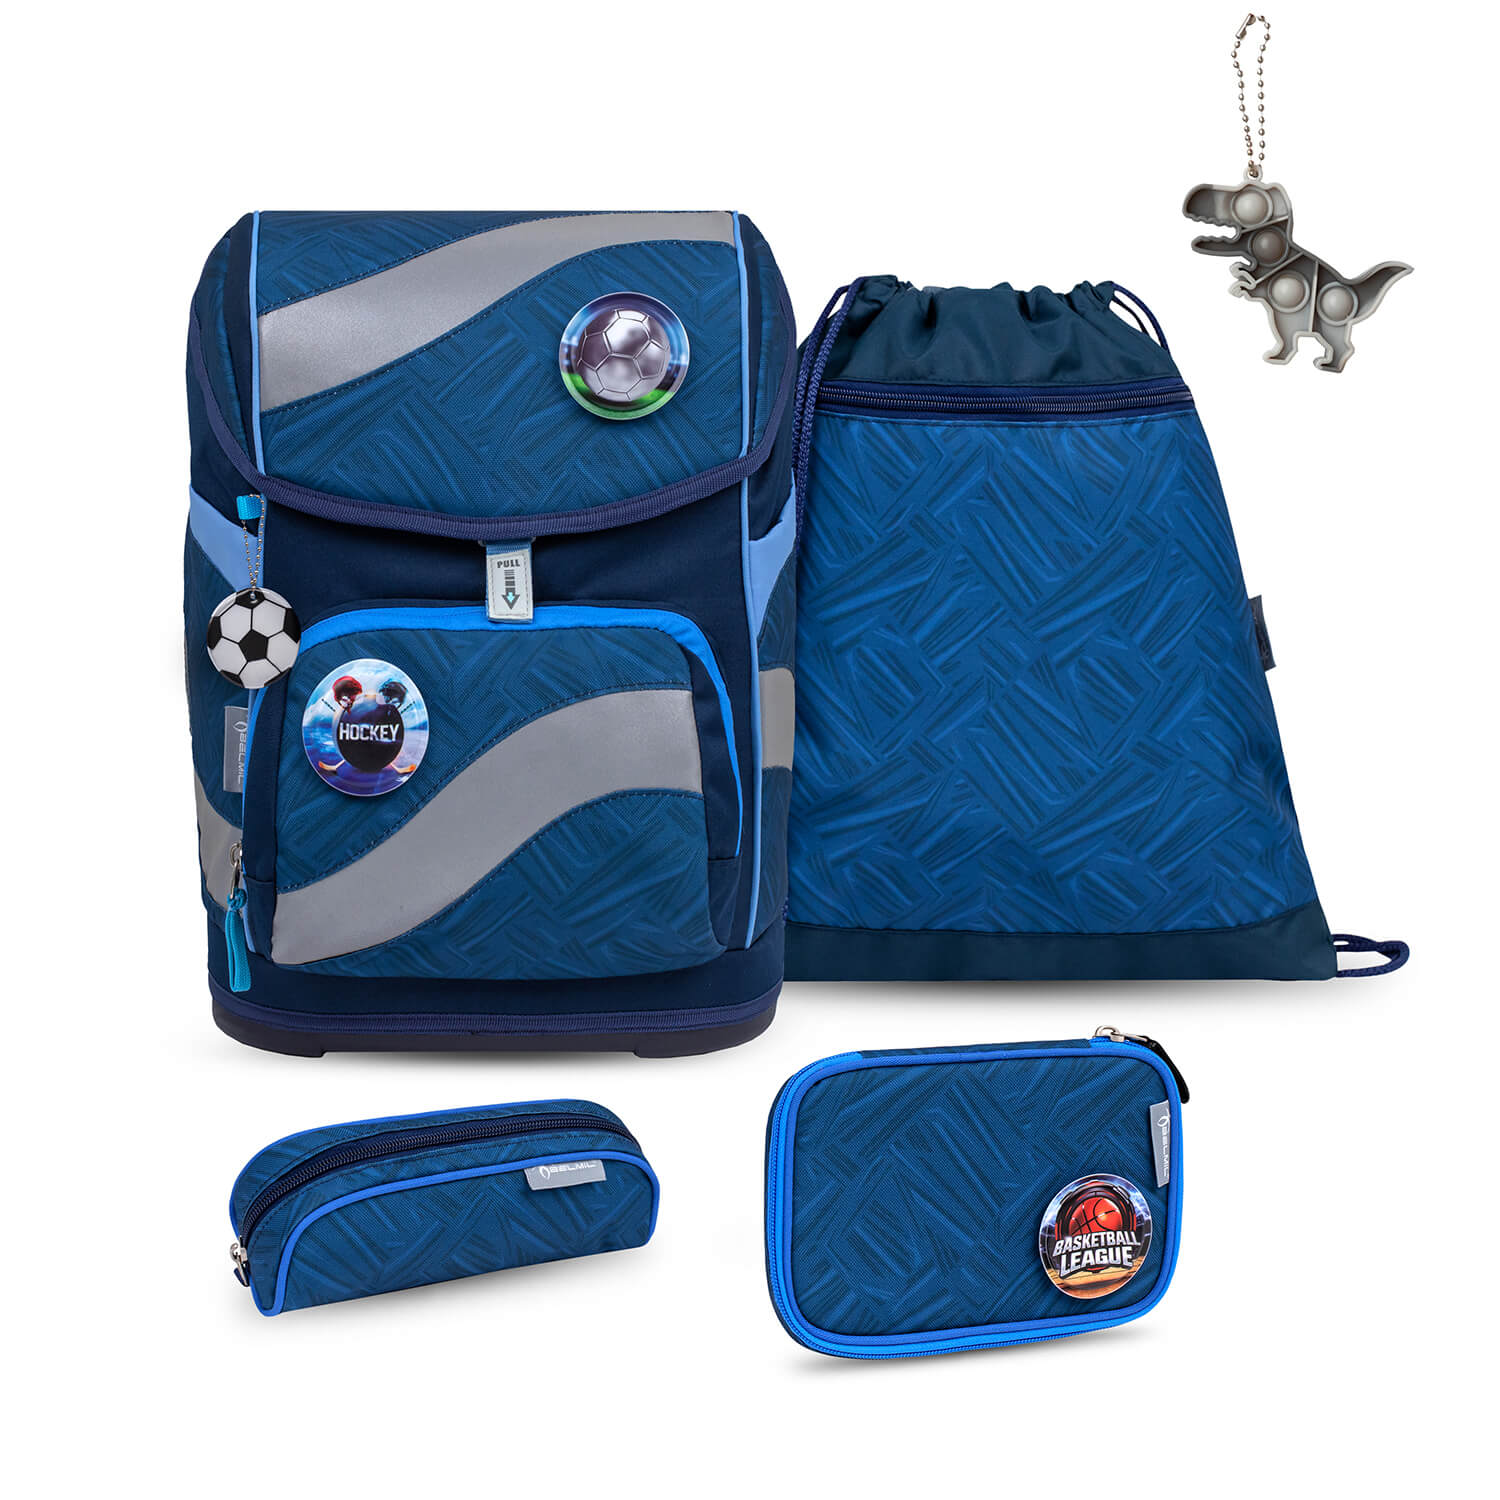 Smarty Blue Motion schoolbag set 6 pcs with GRATIS keychain